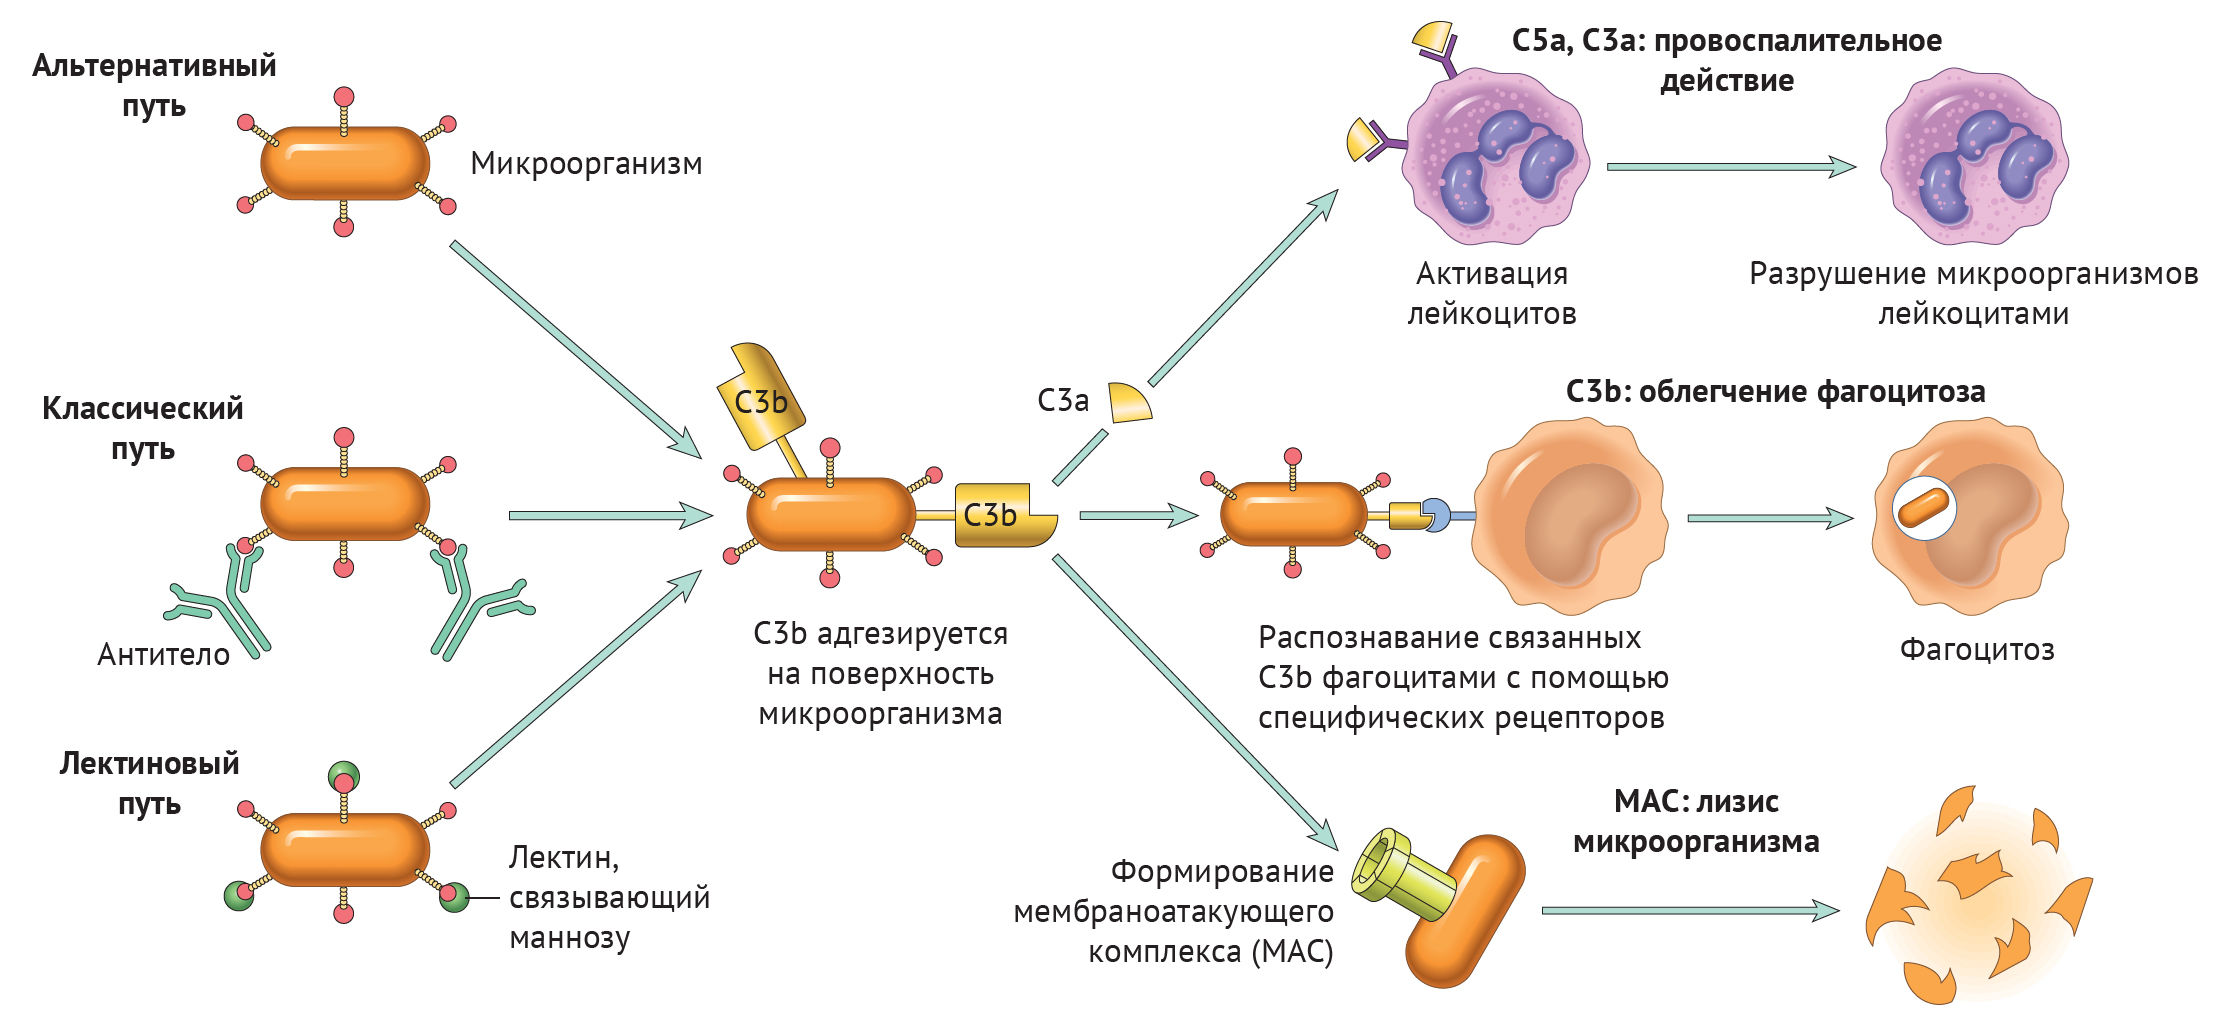 Механизмы иммунитета система комплемента